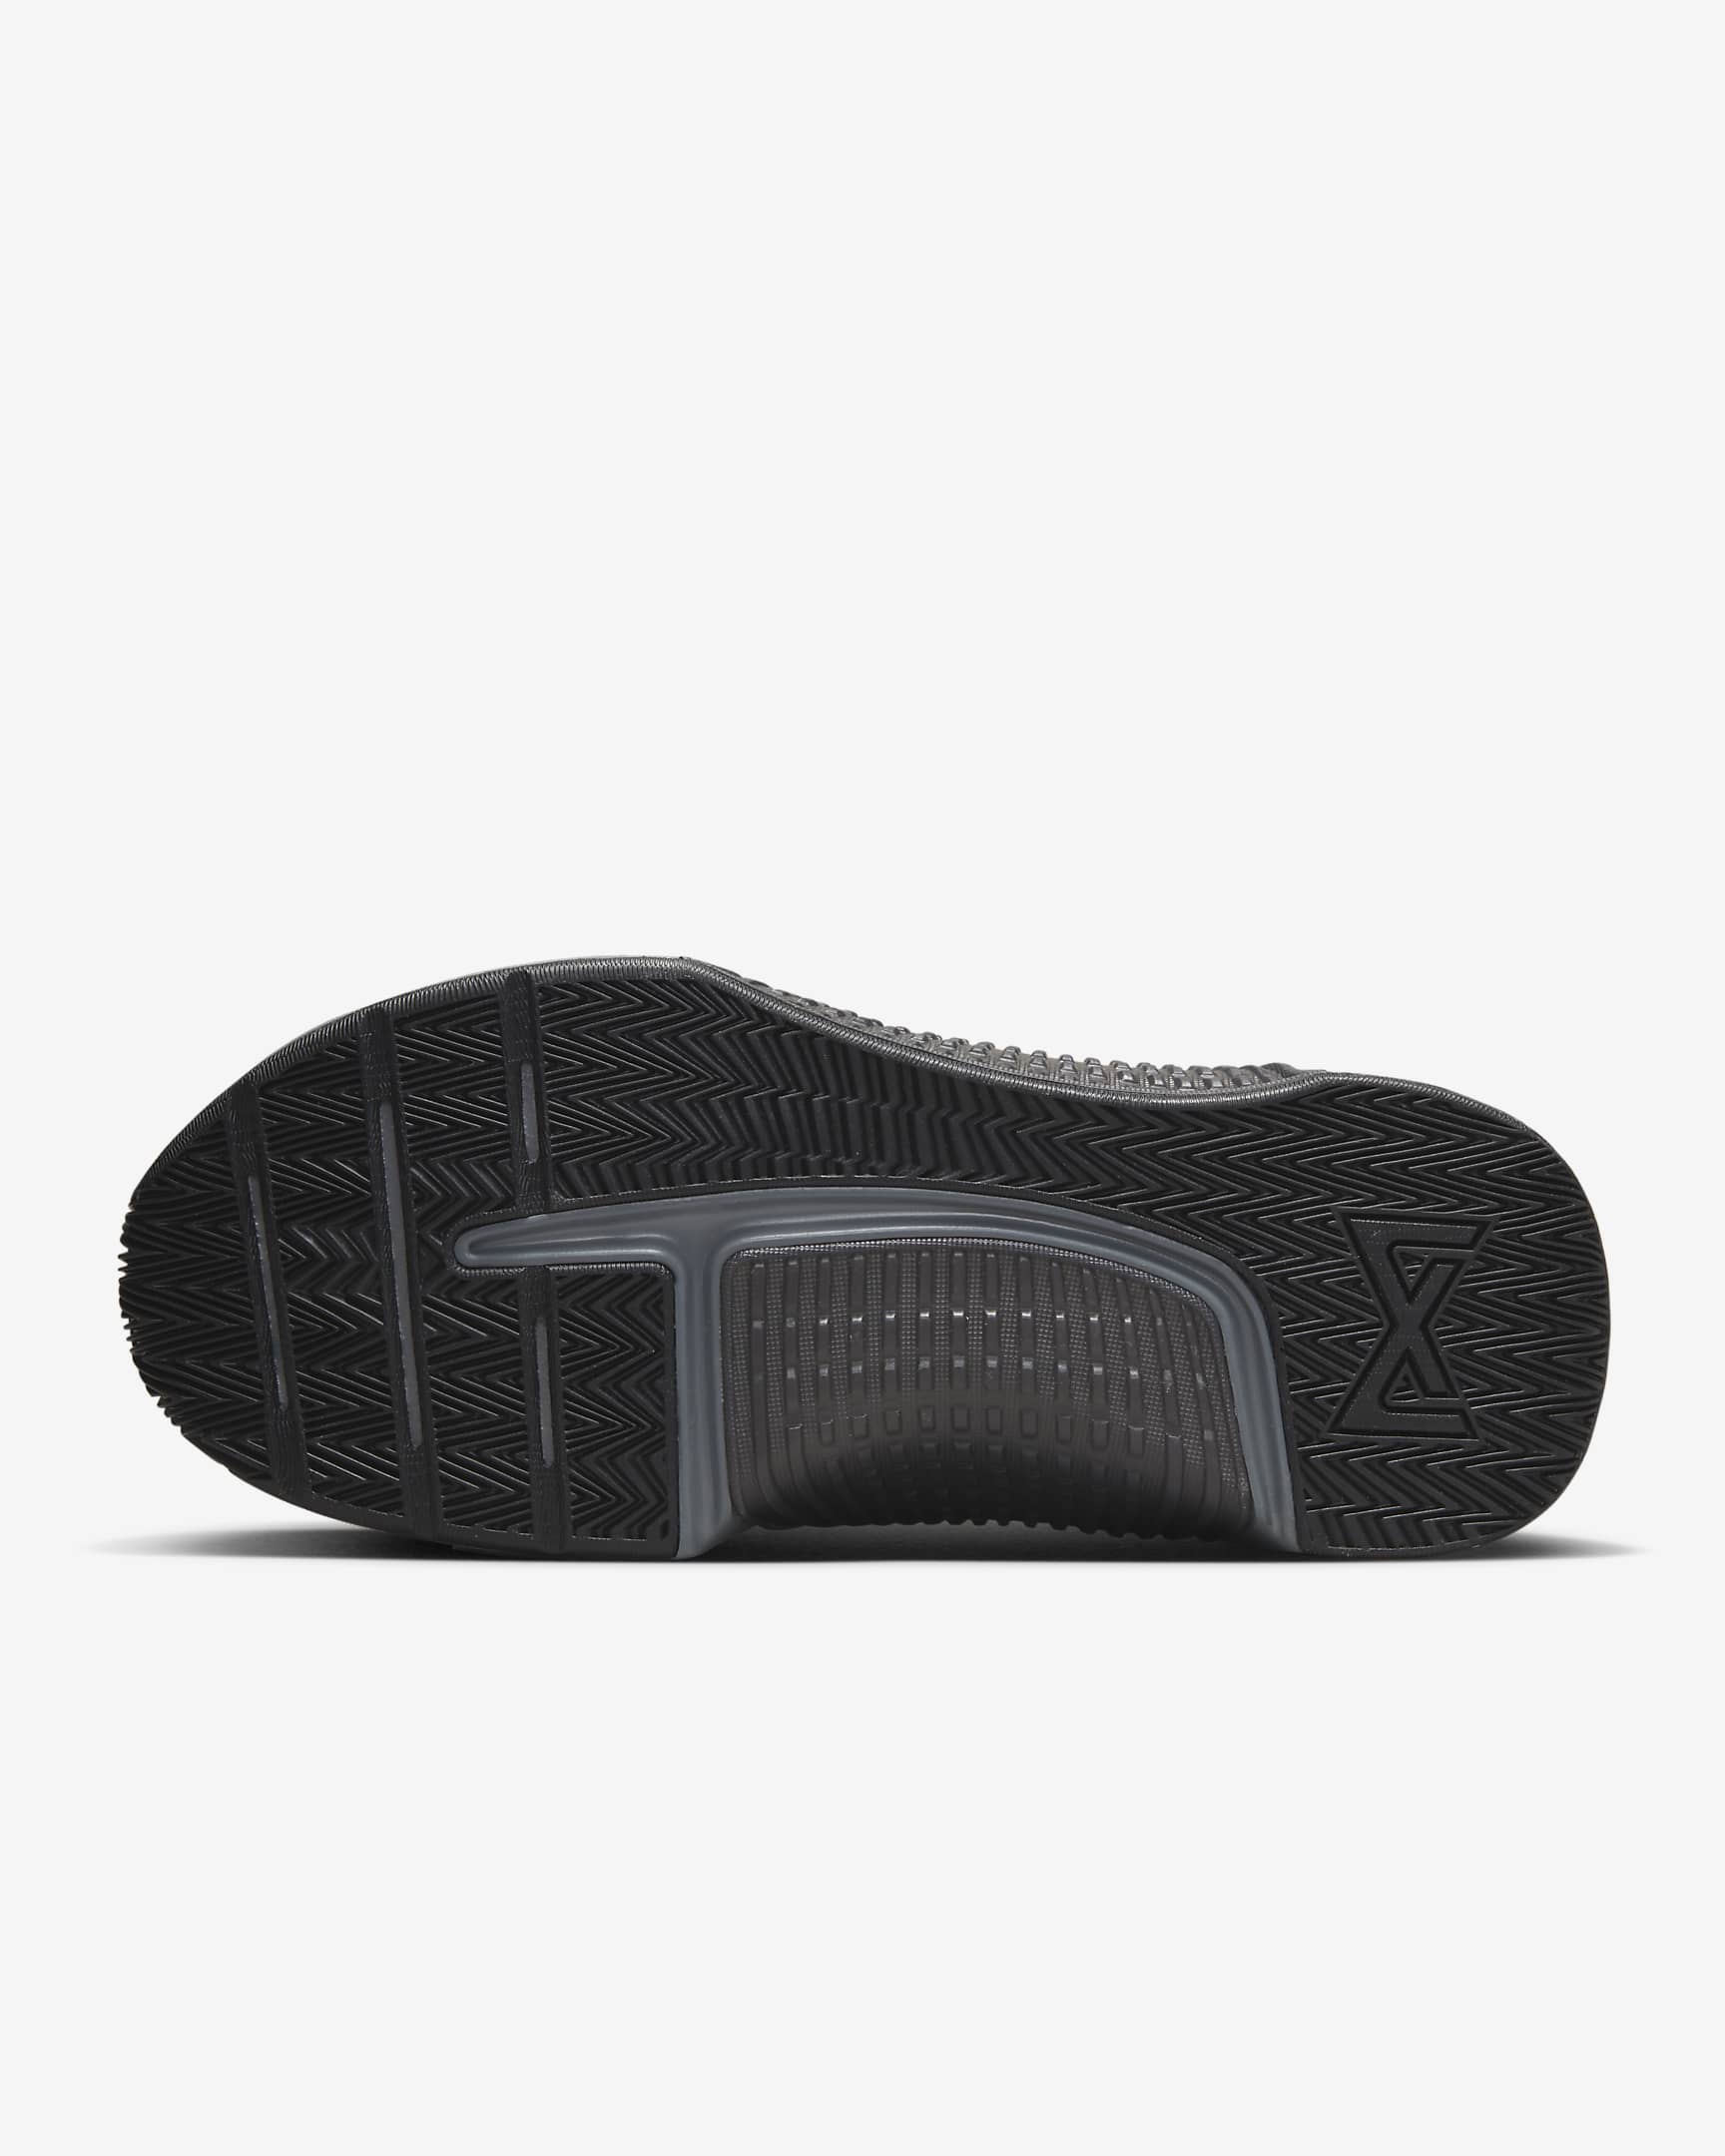 Chaussure d'entraînement Nike Metcon 9 pour femme - Noir/Anthracite/Smoke Grey/Blanc